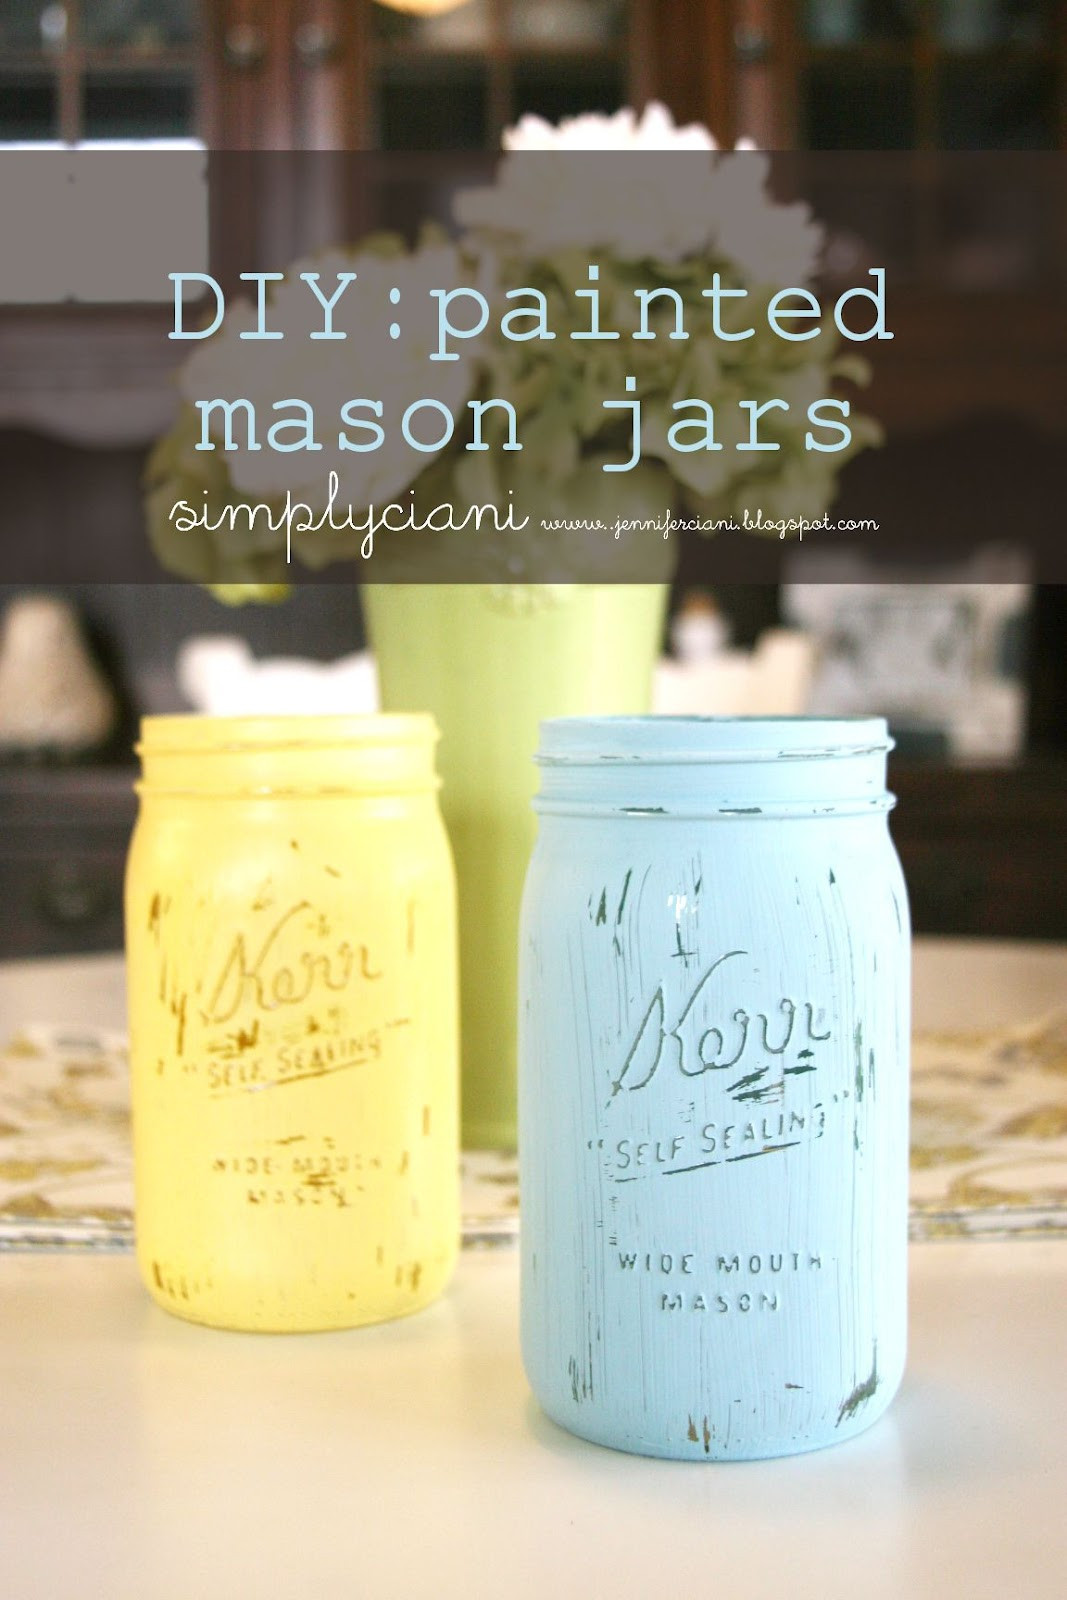 Best ideas about DIY Mason Jar
. Save or Pin DIY Painted Mason Jars Now.